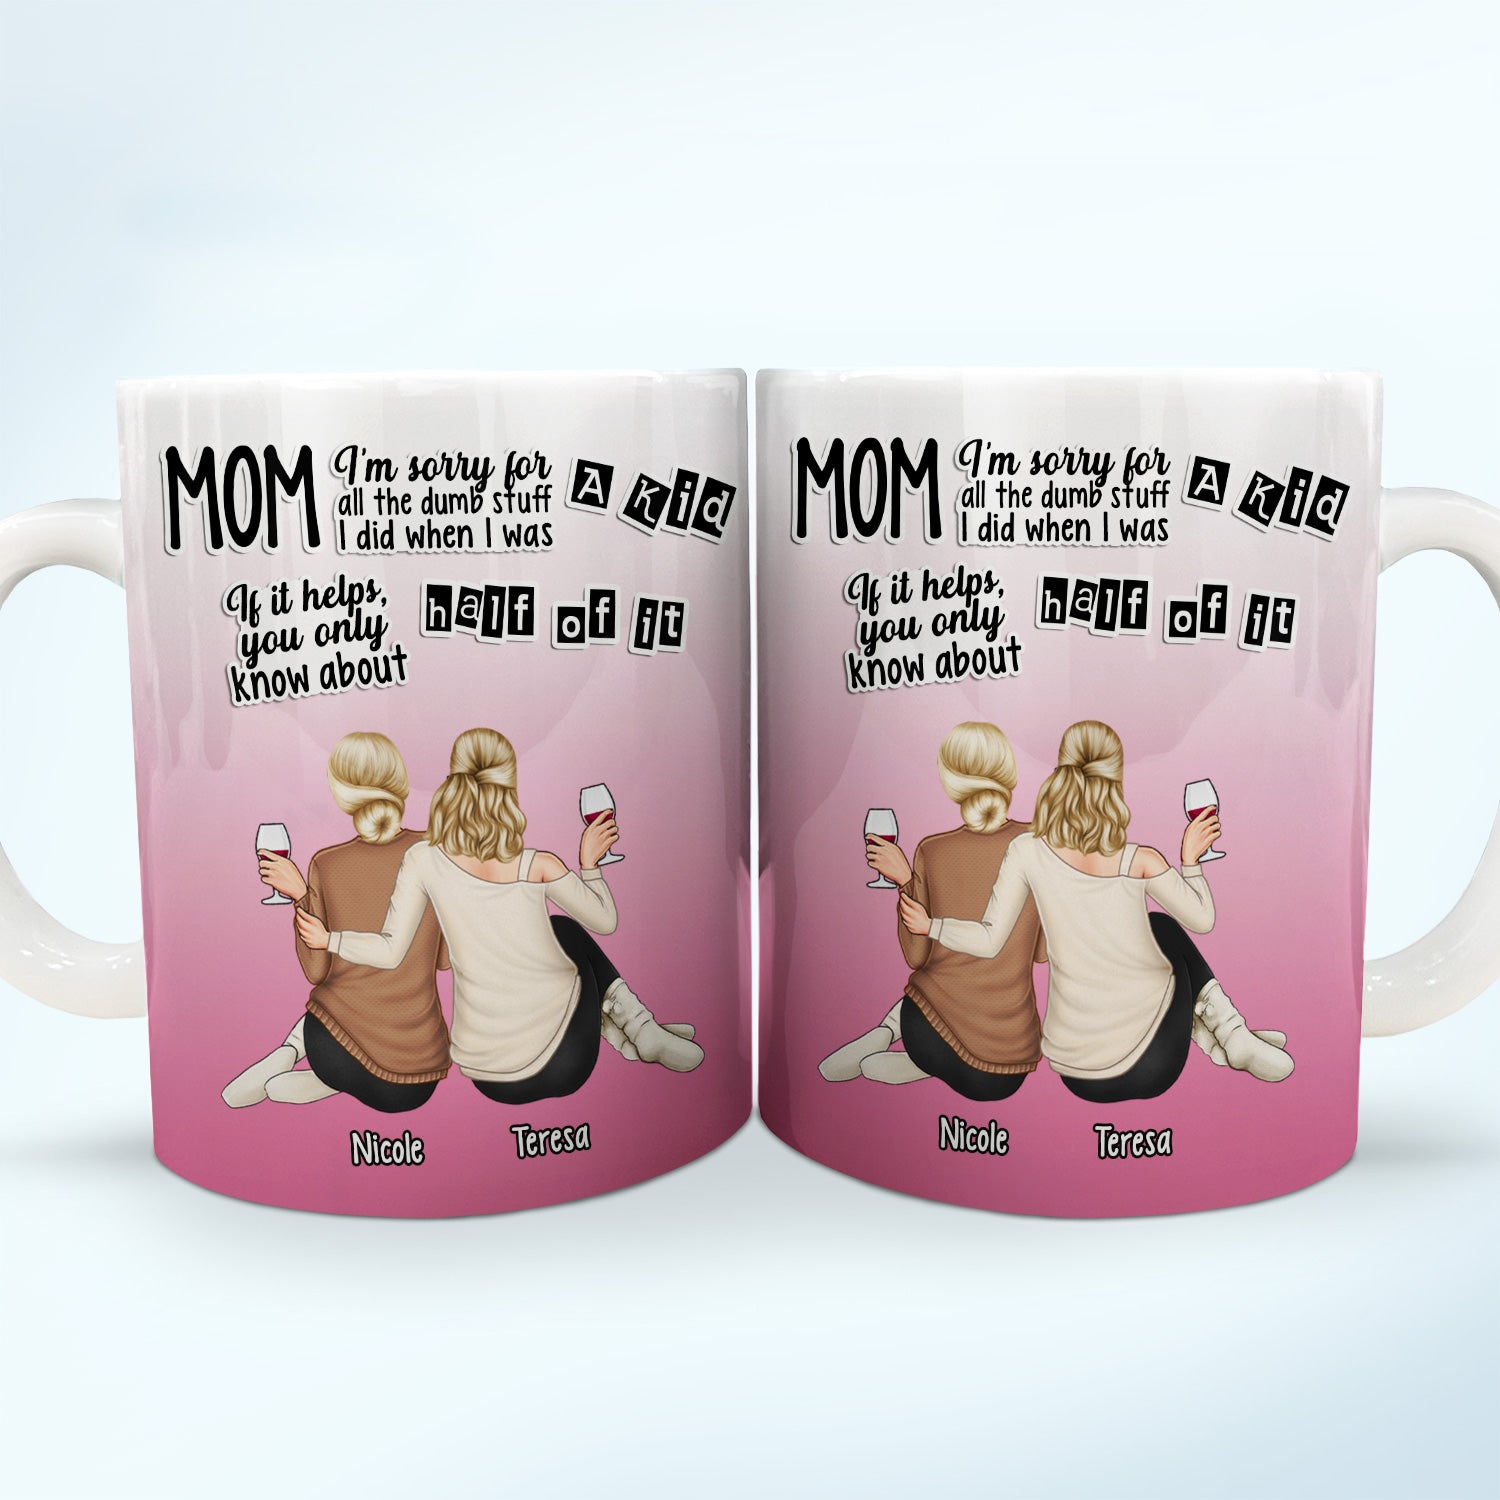 All The Dumb Stuff - Gift For Mom - Personalized White Edge-to-Edge Mug